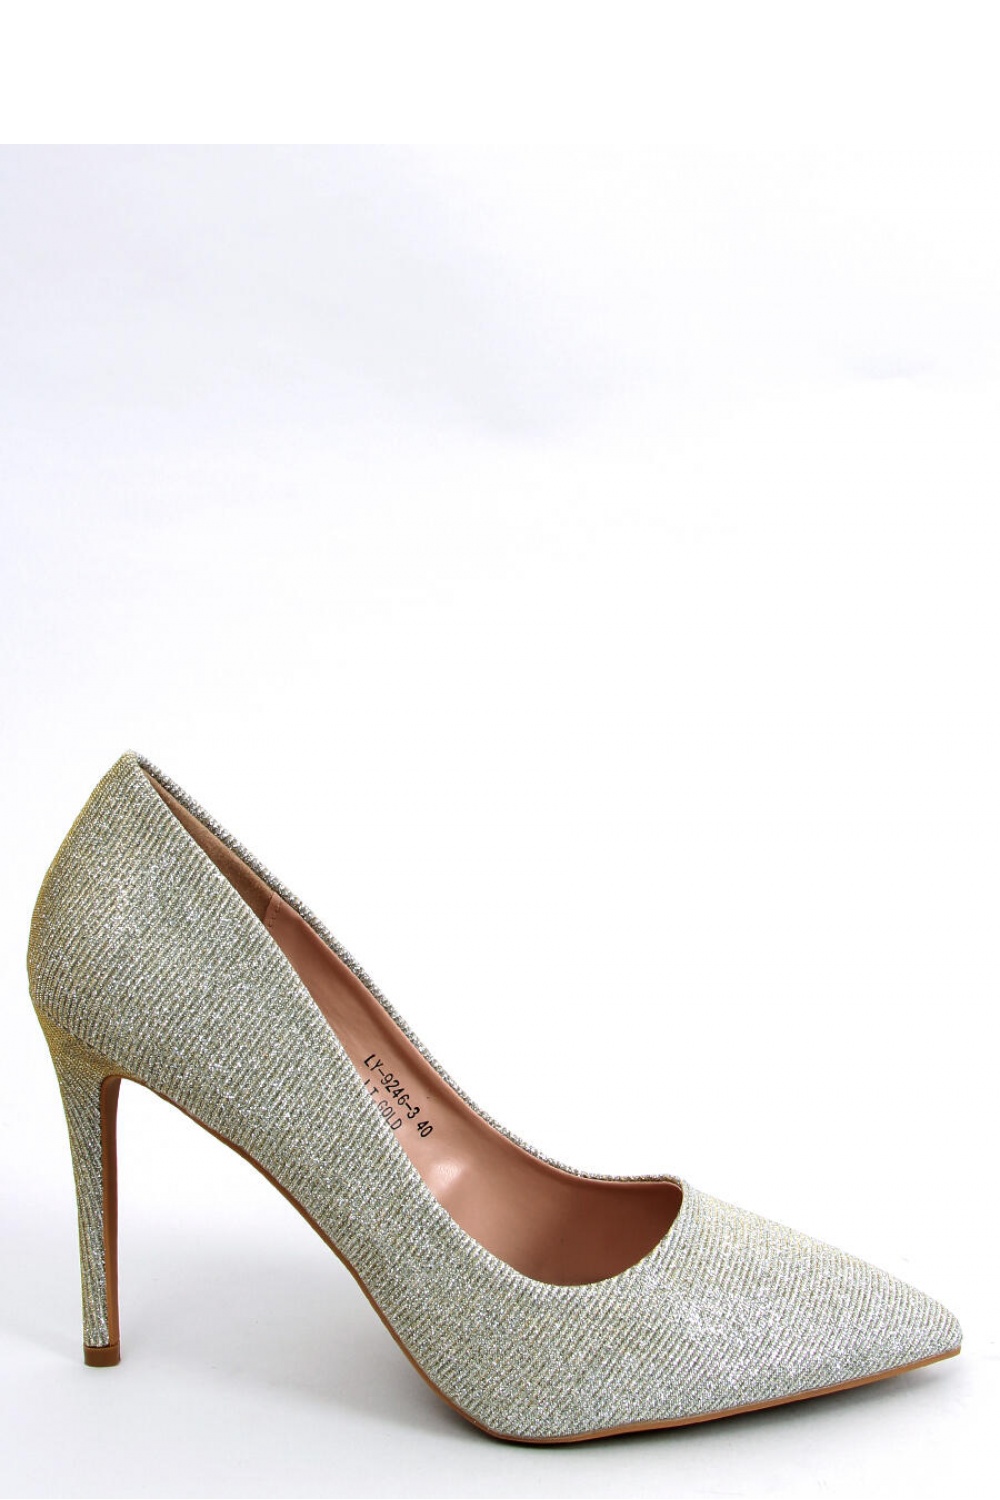  High heels model 174112 Inello  yellow